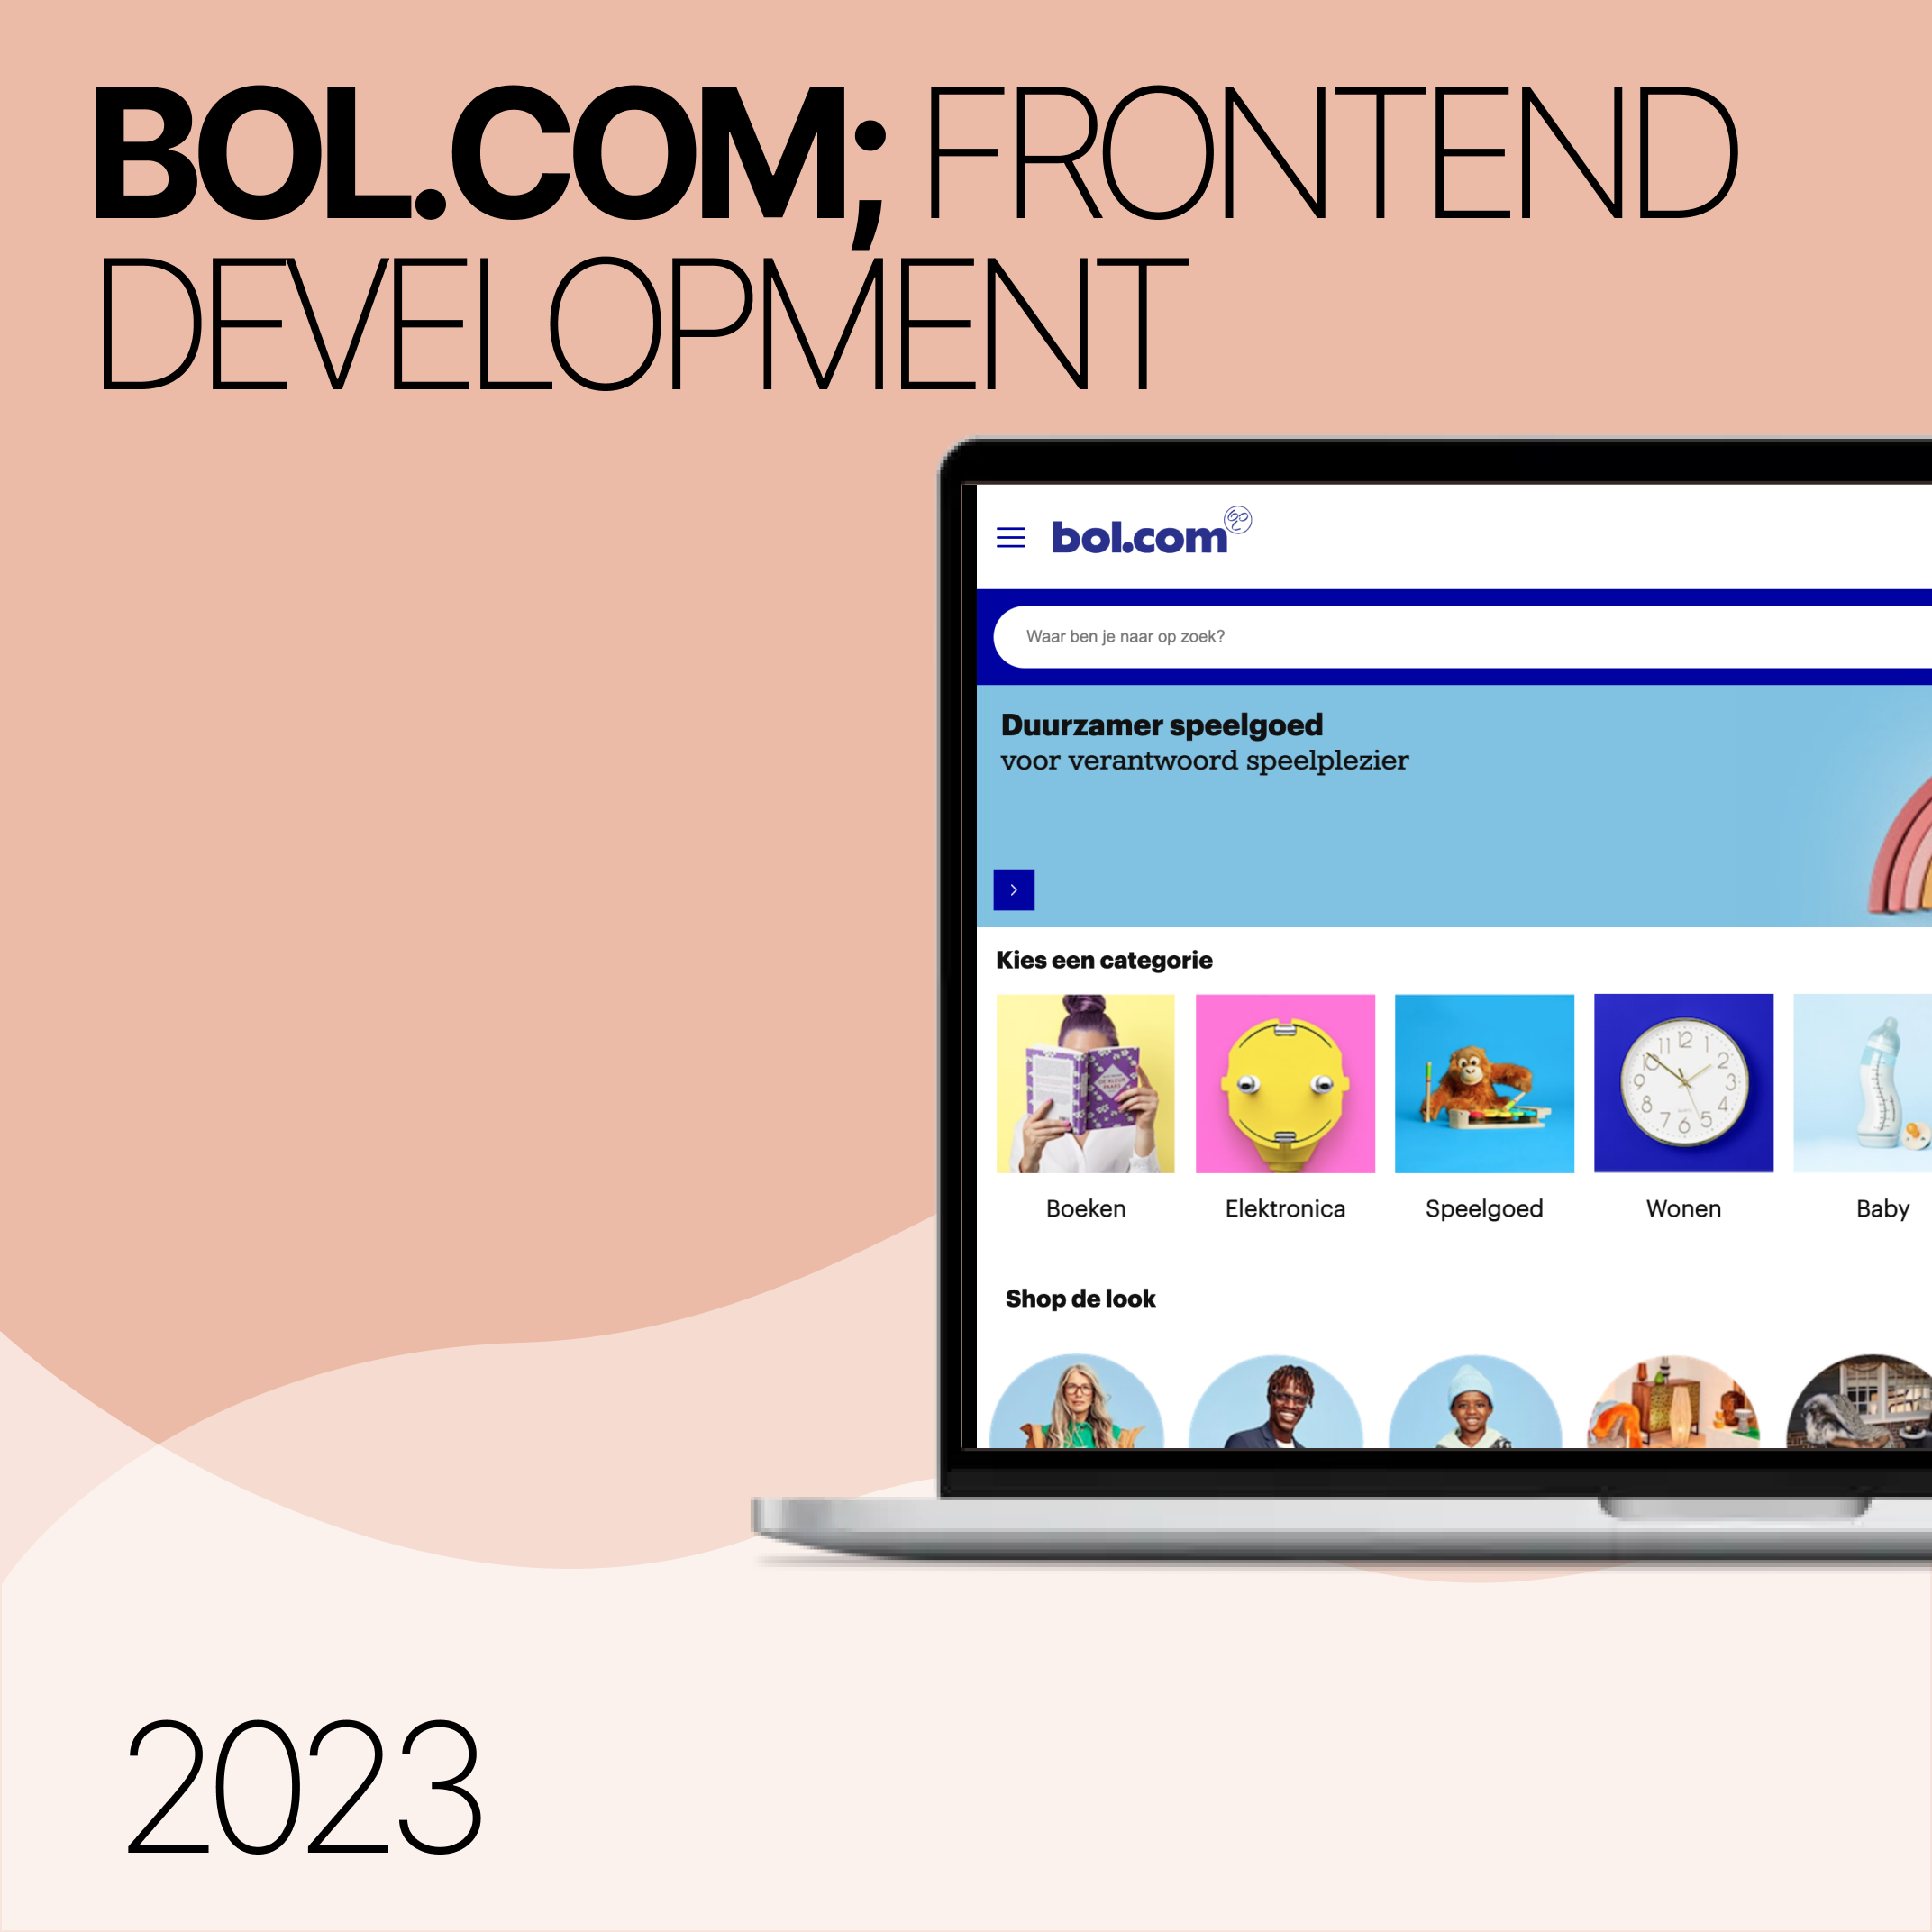 Bol.com: Frontend Development